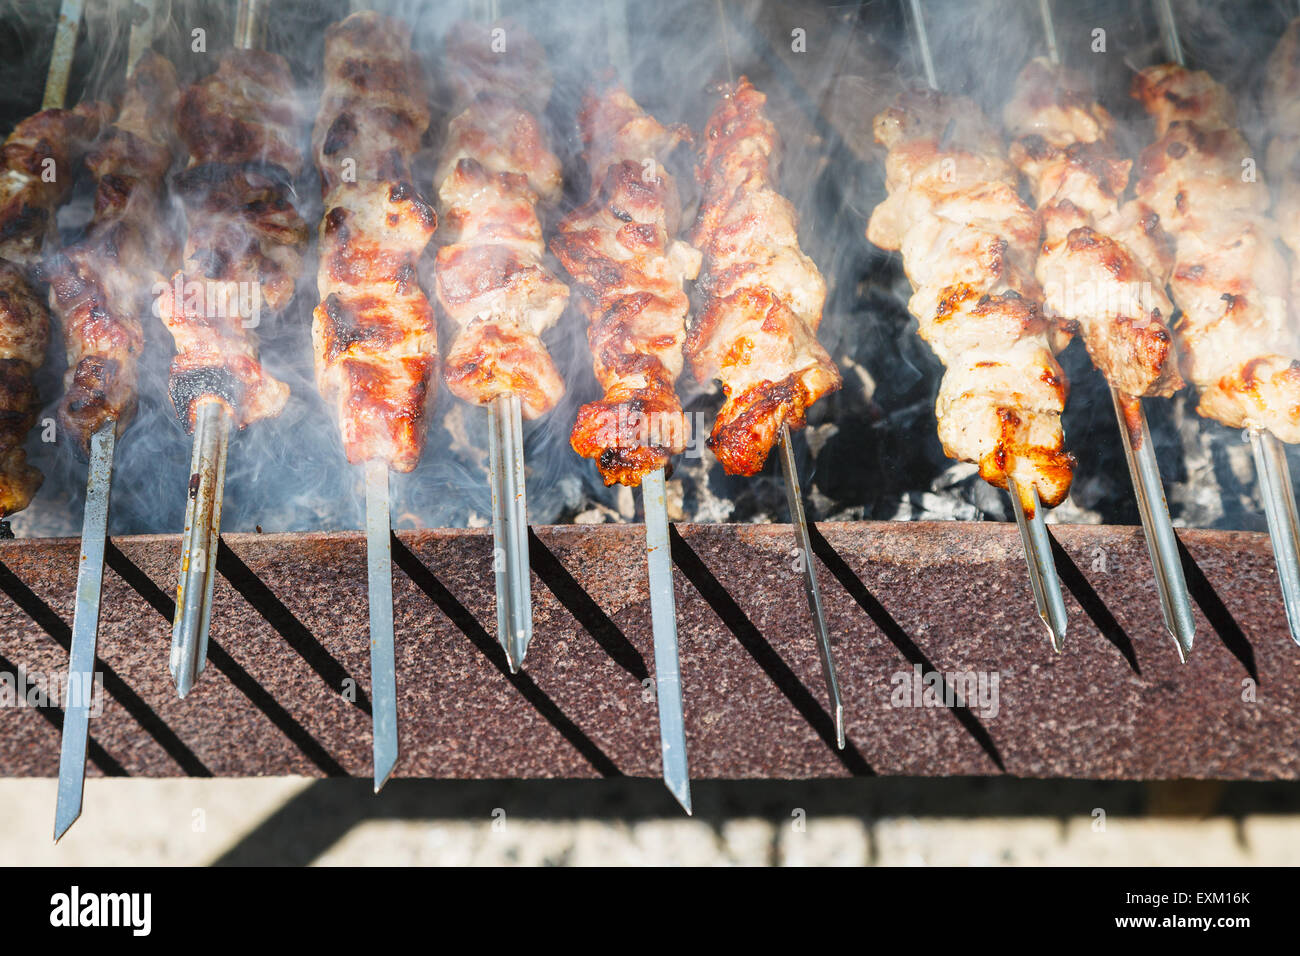 many shish kebab sticks preparing on outdoor grill Stock Photo